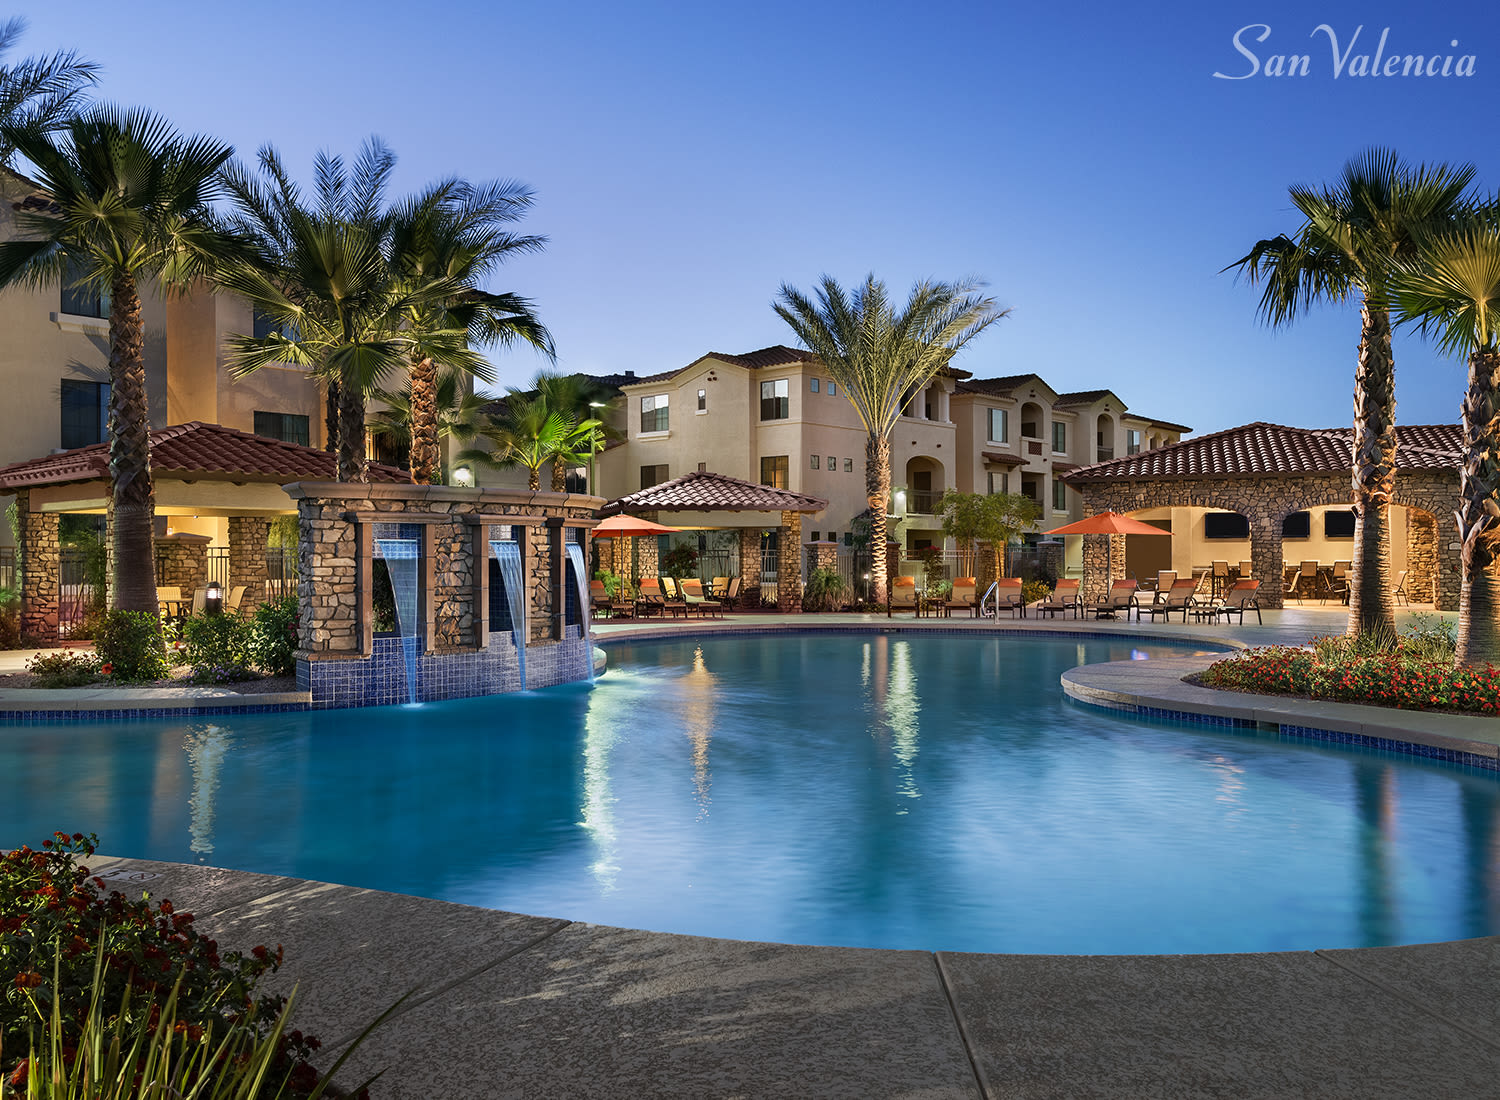 San Valencia apartments in Chandler, Arizona